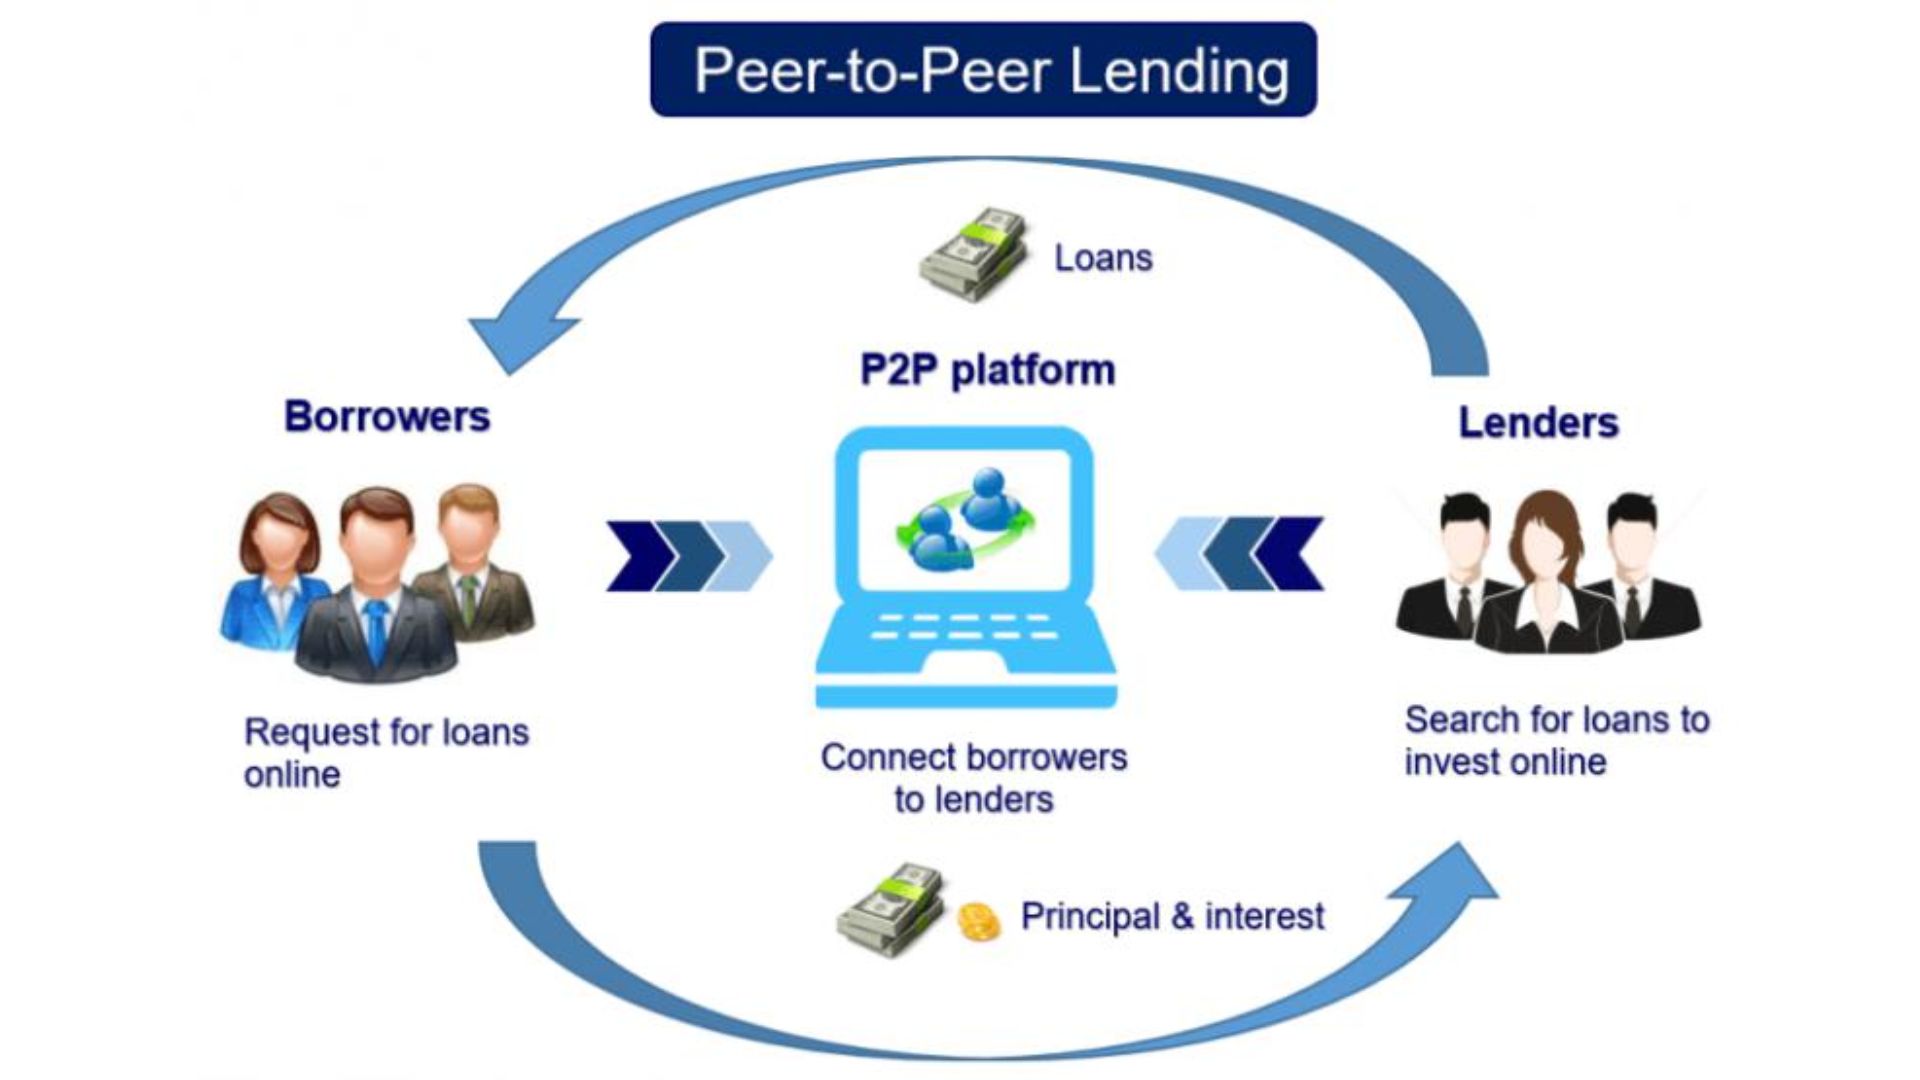 Peer-to-Peer Lending with Prosper, LendingClub, and Groundfloor